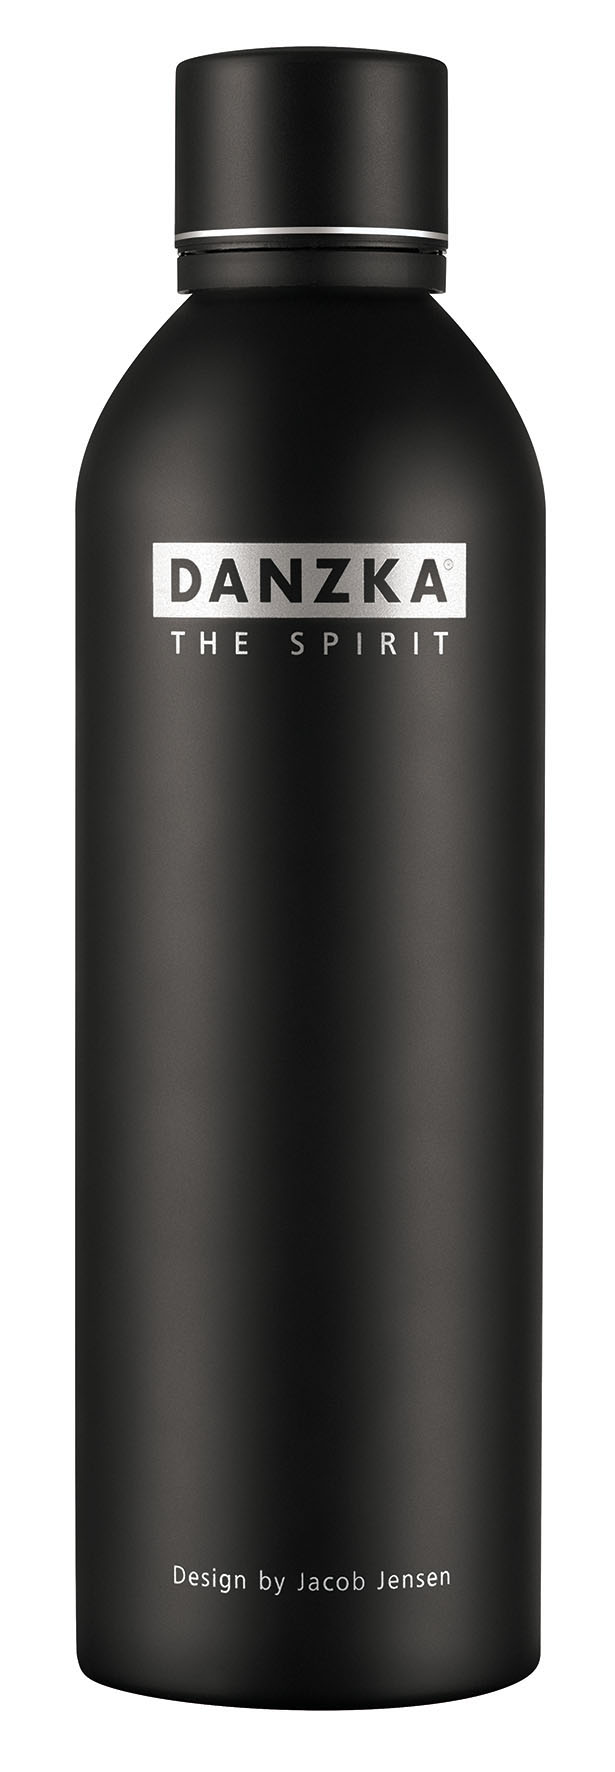 danzka_the_spirit